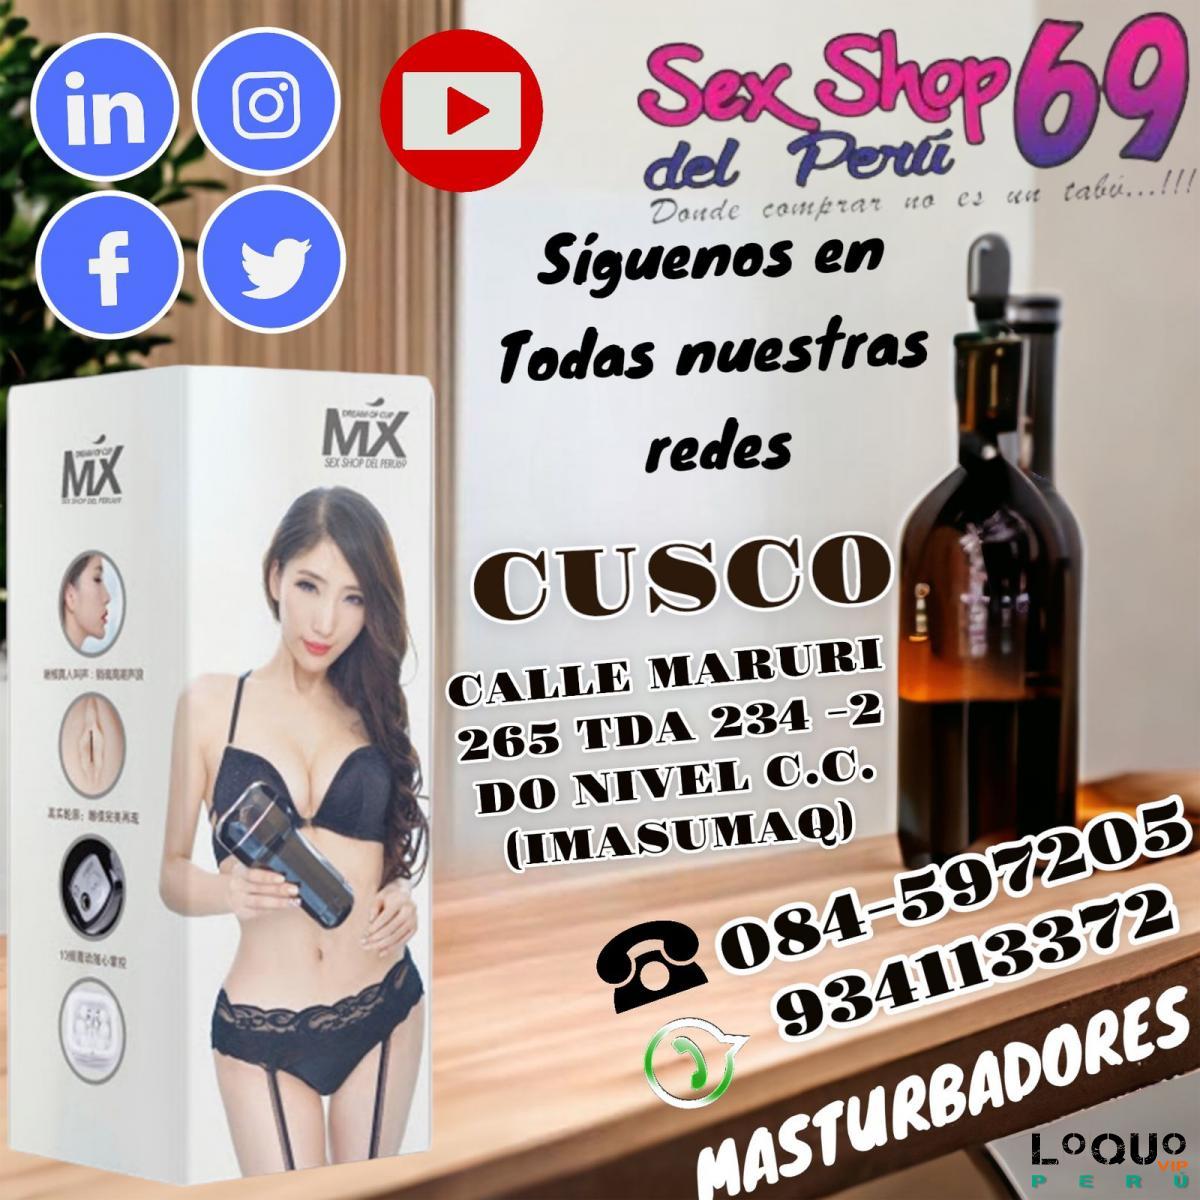 Sex Shop Arequipa: masturbador linterna_vibrating